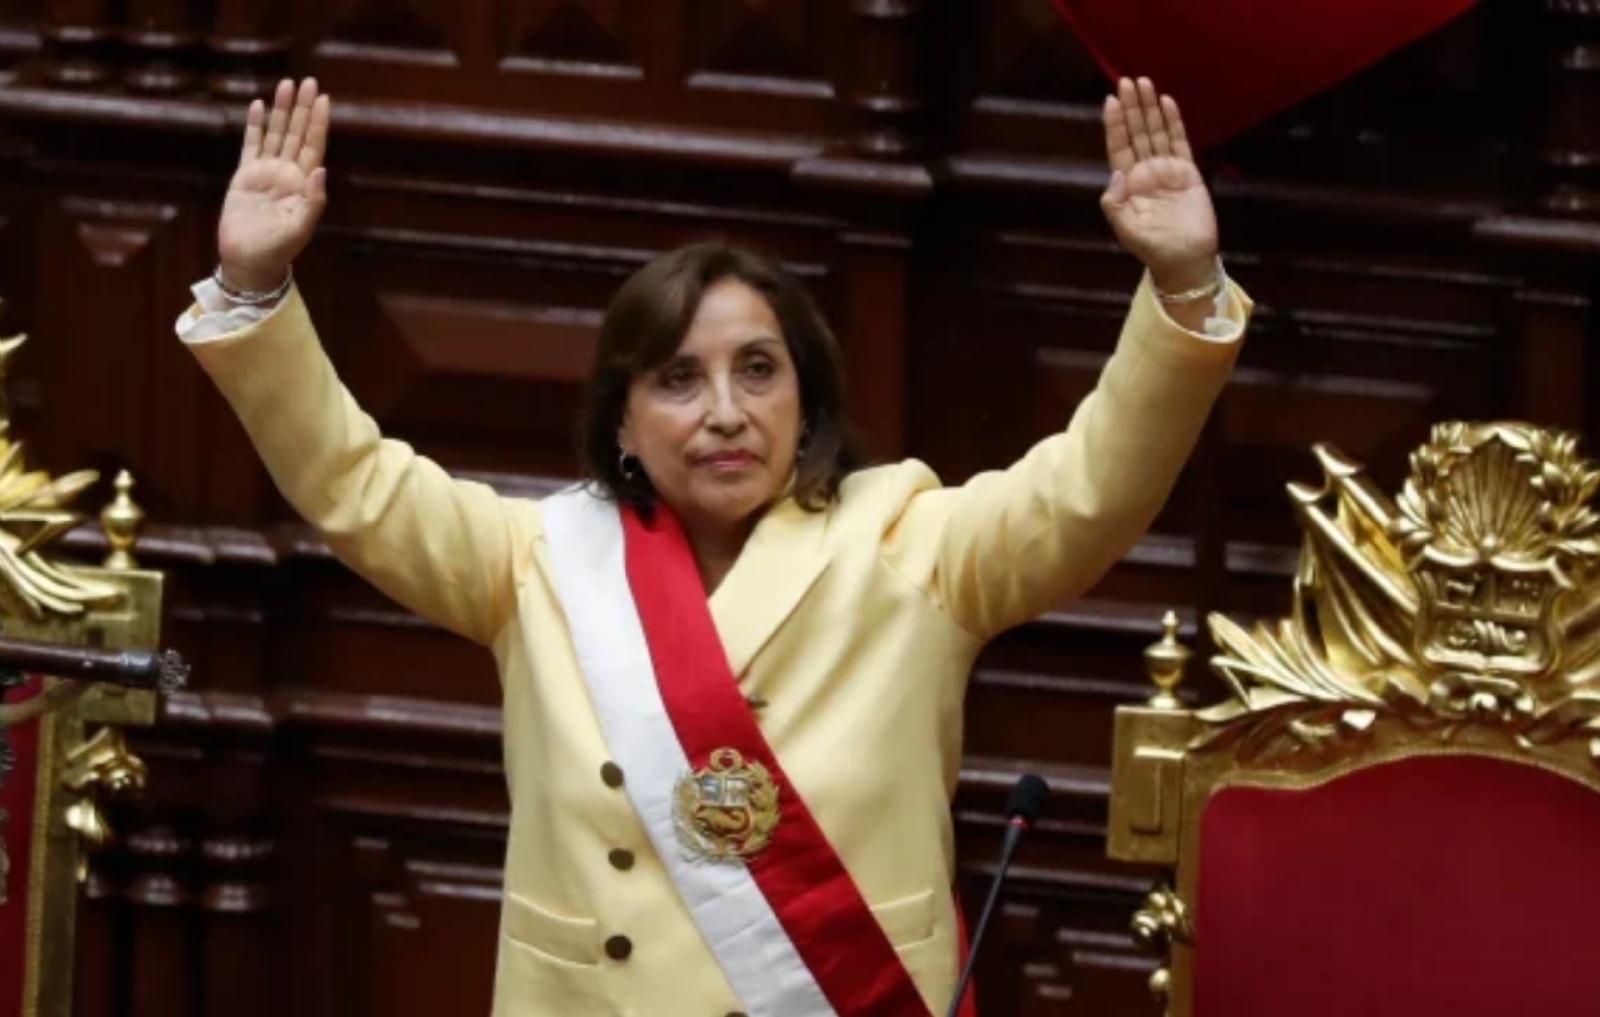 Perú retira a su embajador en México definitivamente, se rompen lazos diplomáticos